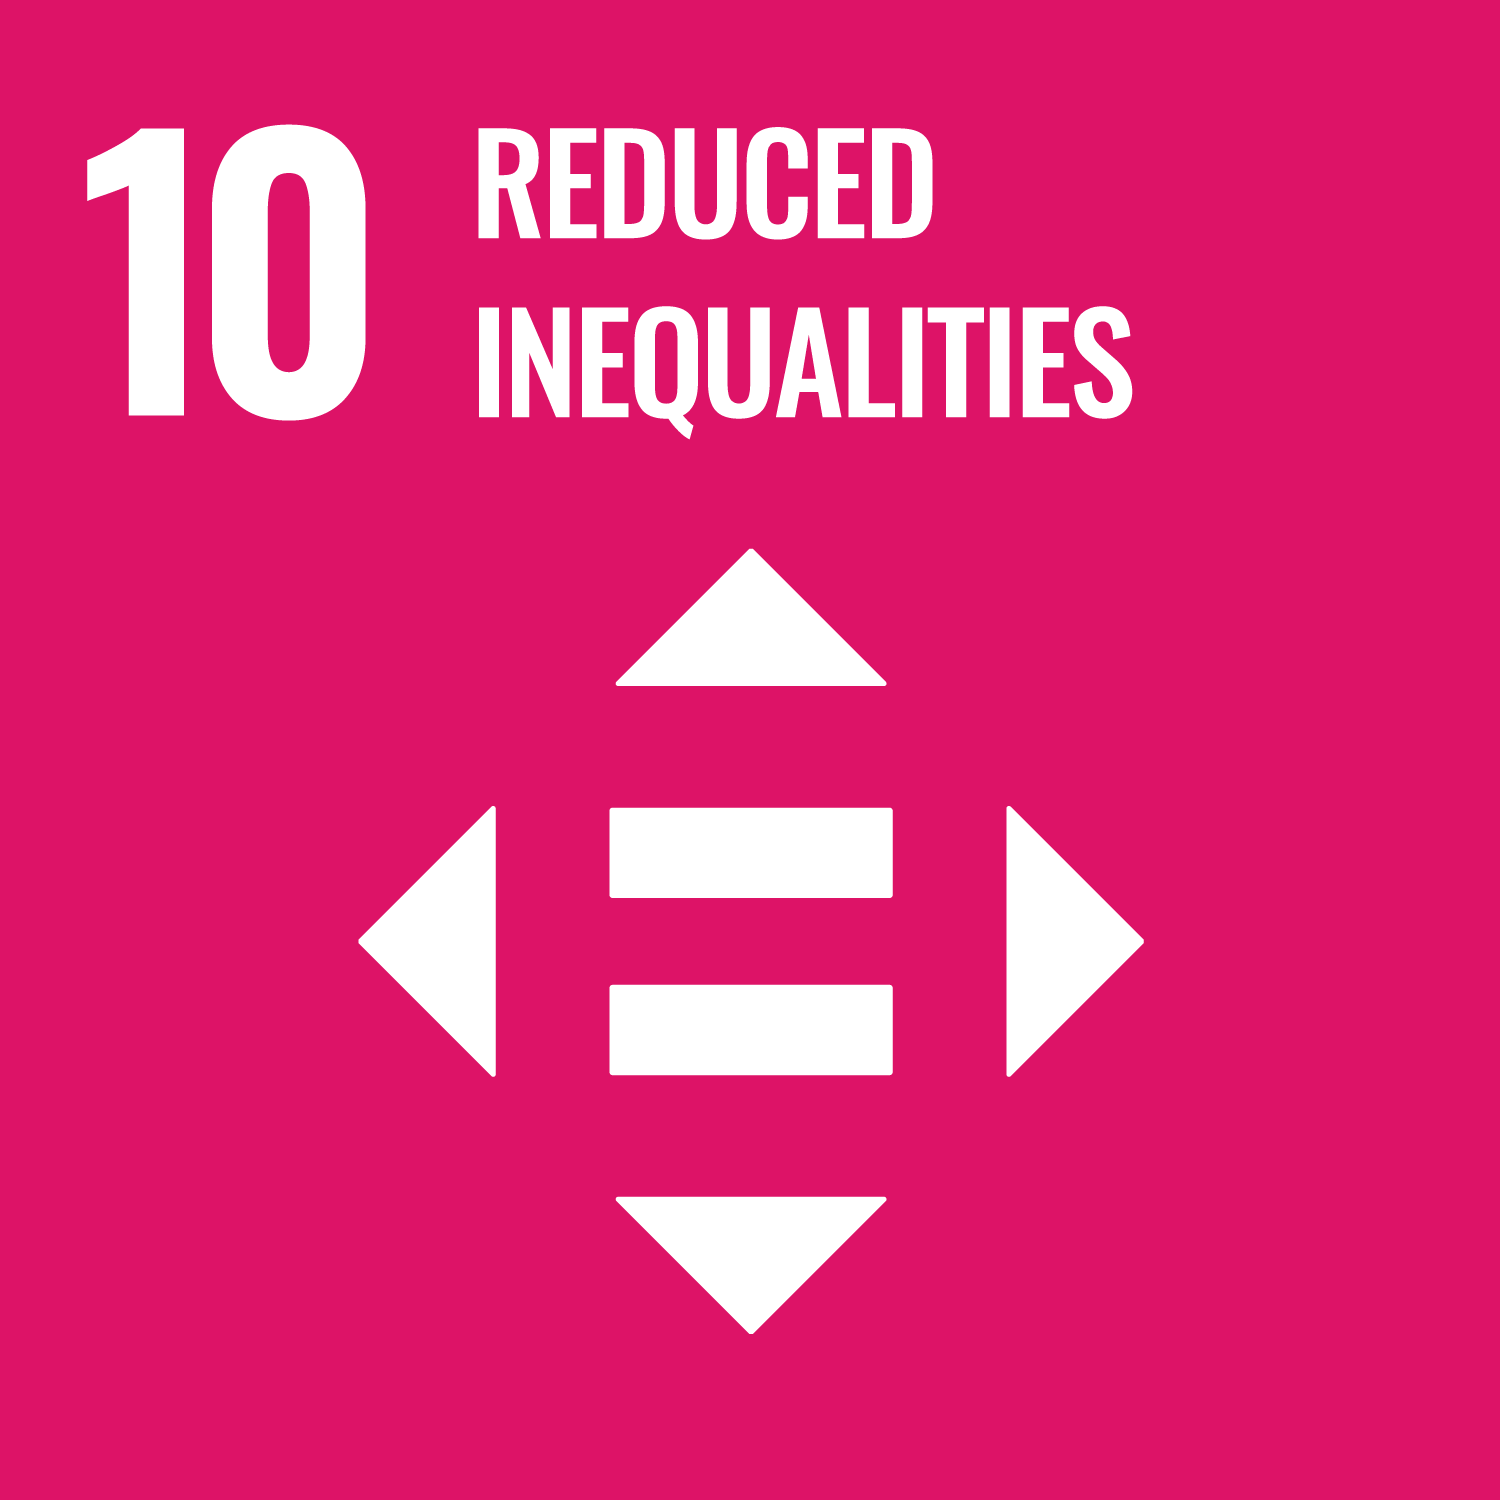 Reduced inequalities.